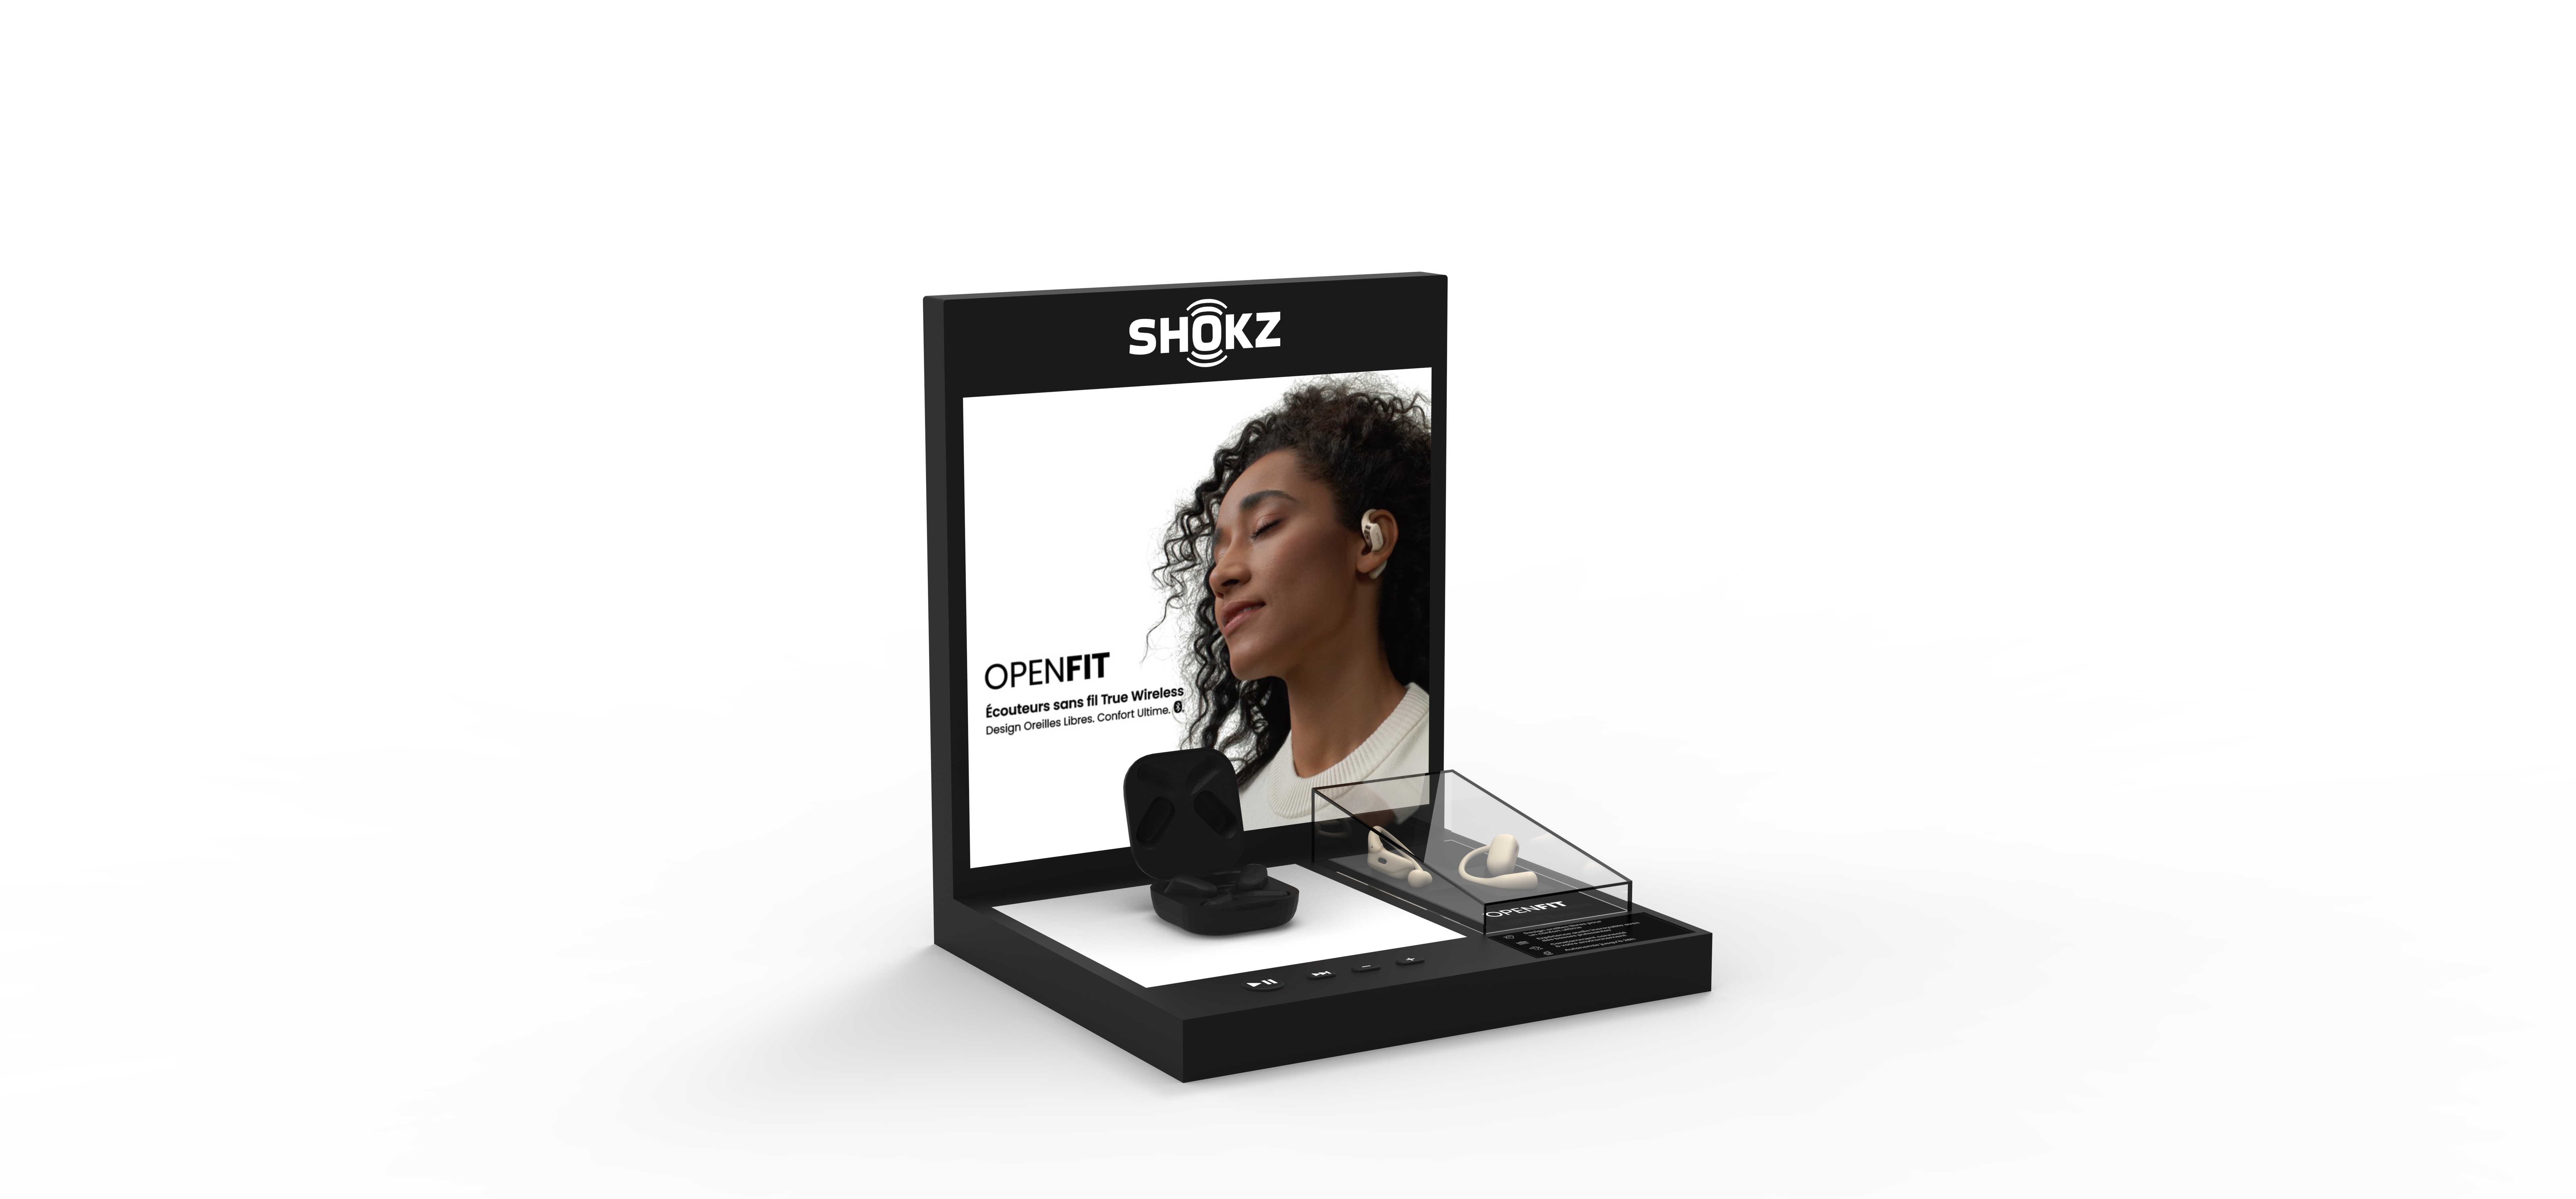 Image Shokz Standard 2.0 POP (OpenFit) - French